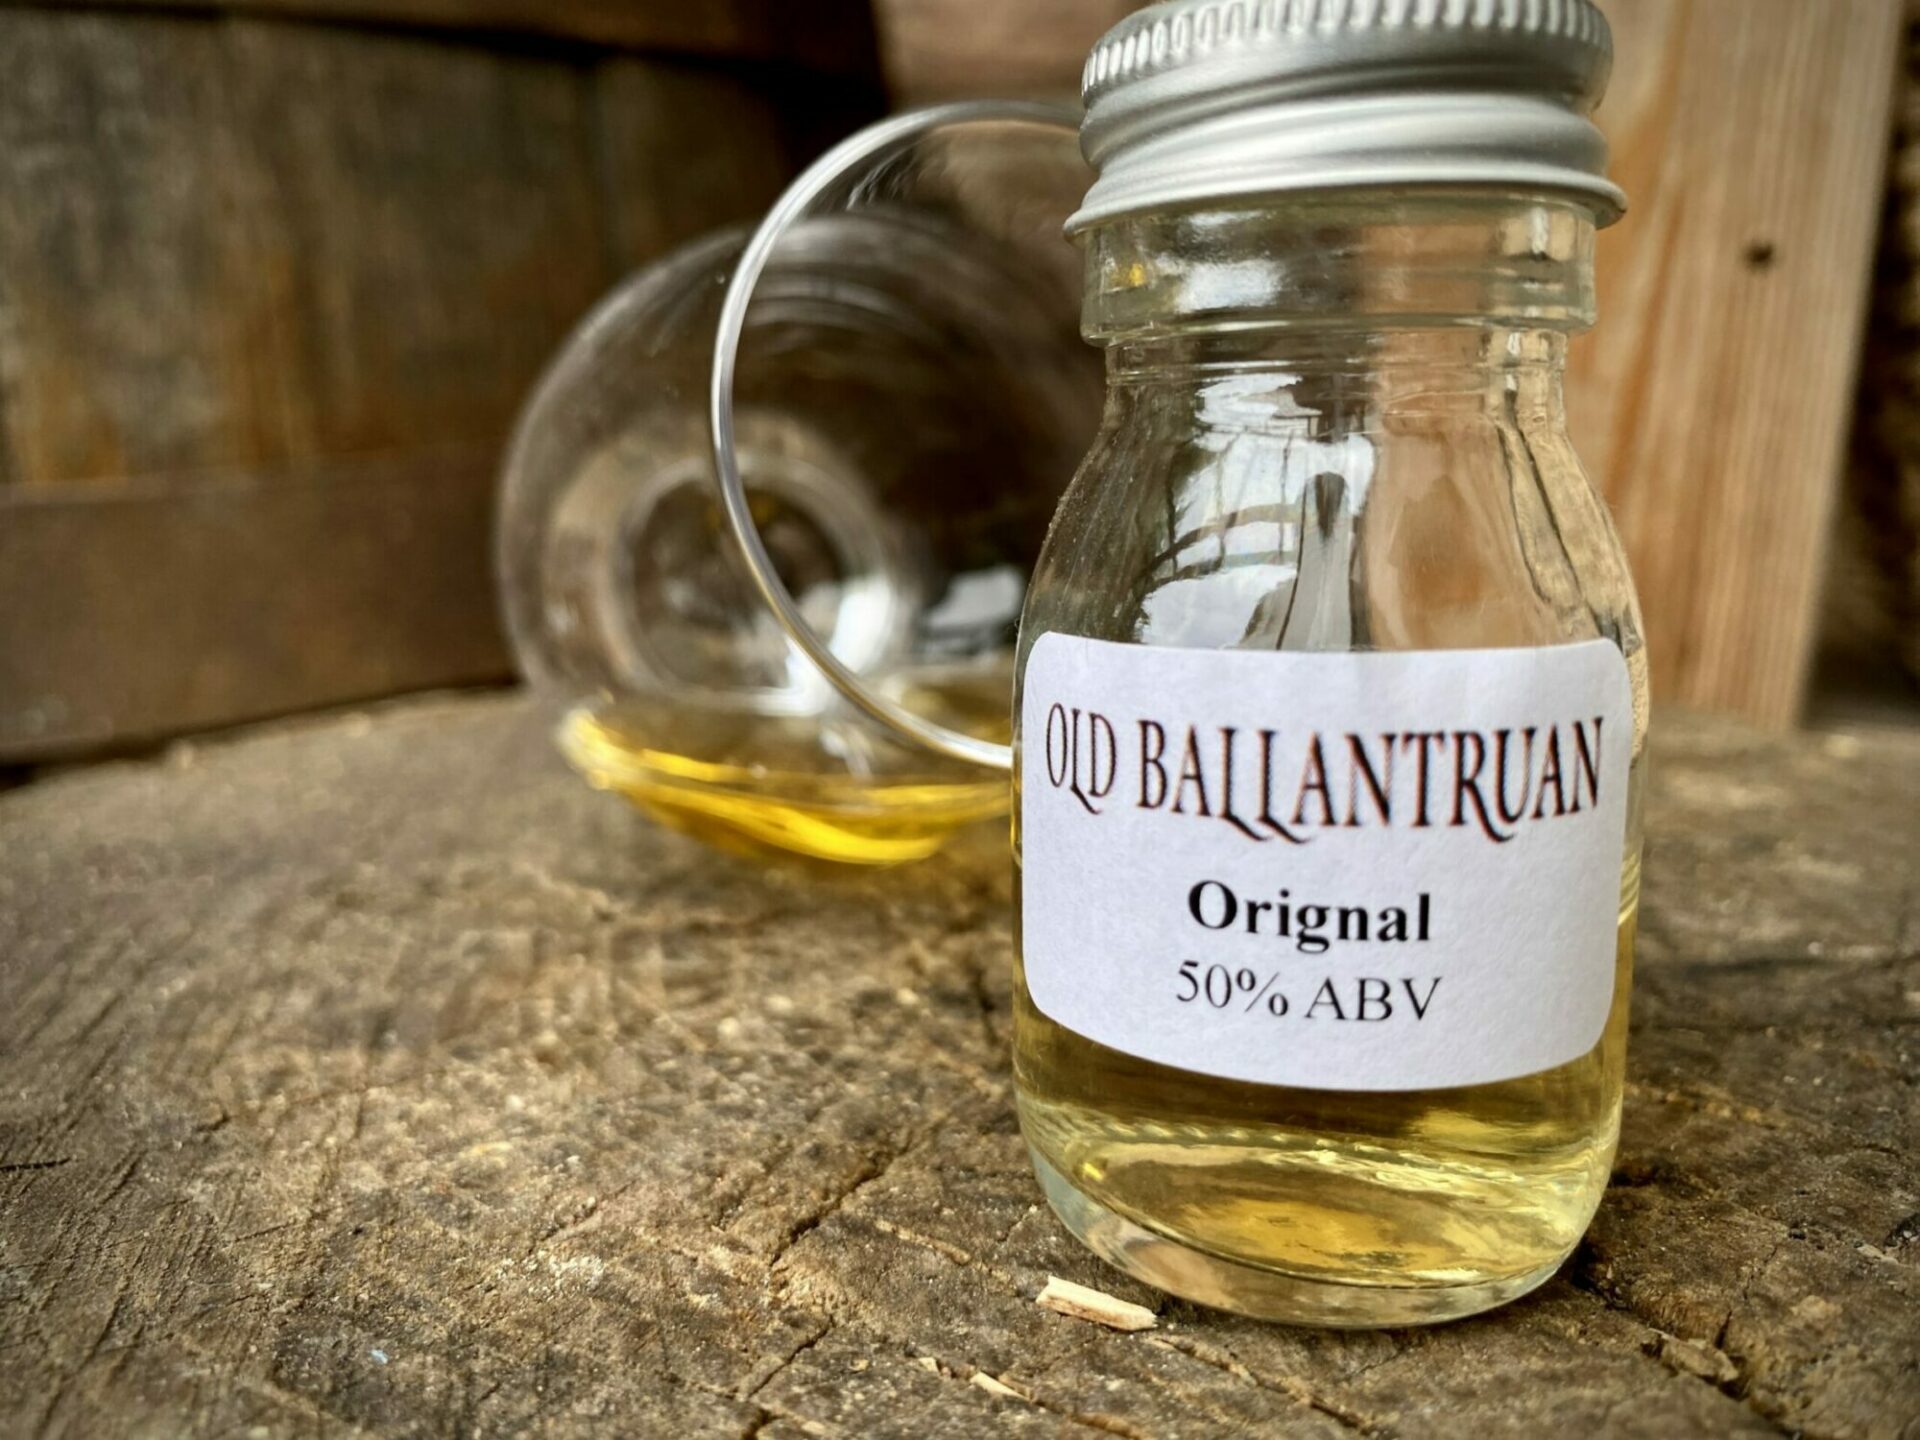 Old Ballantruan Original Single Malt Scotch Whisky